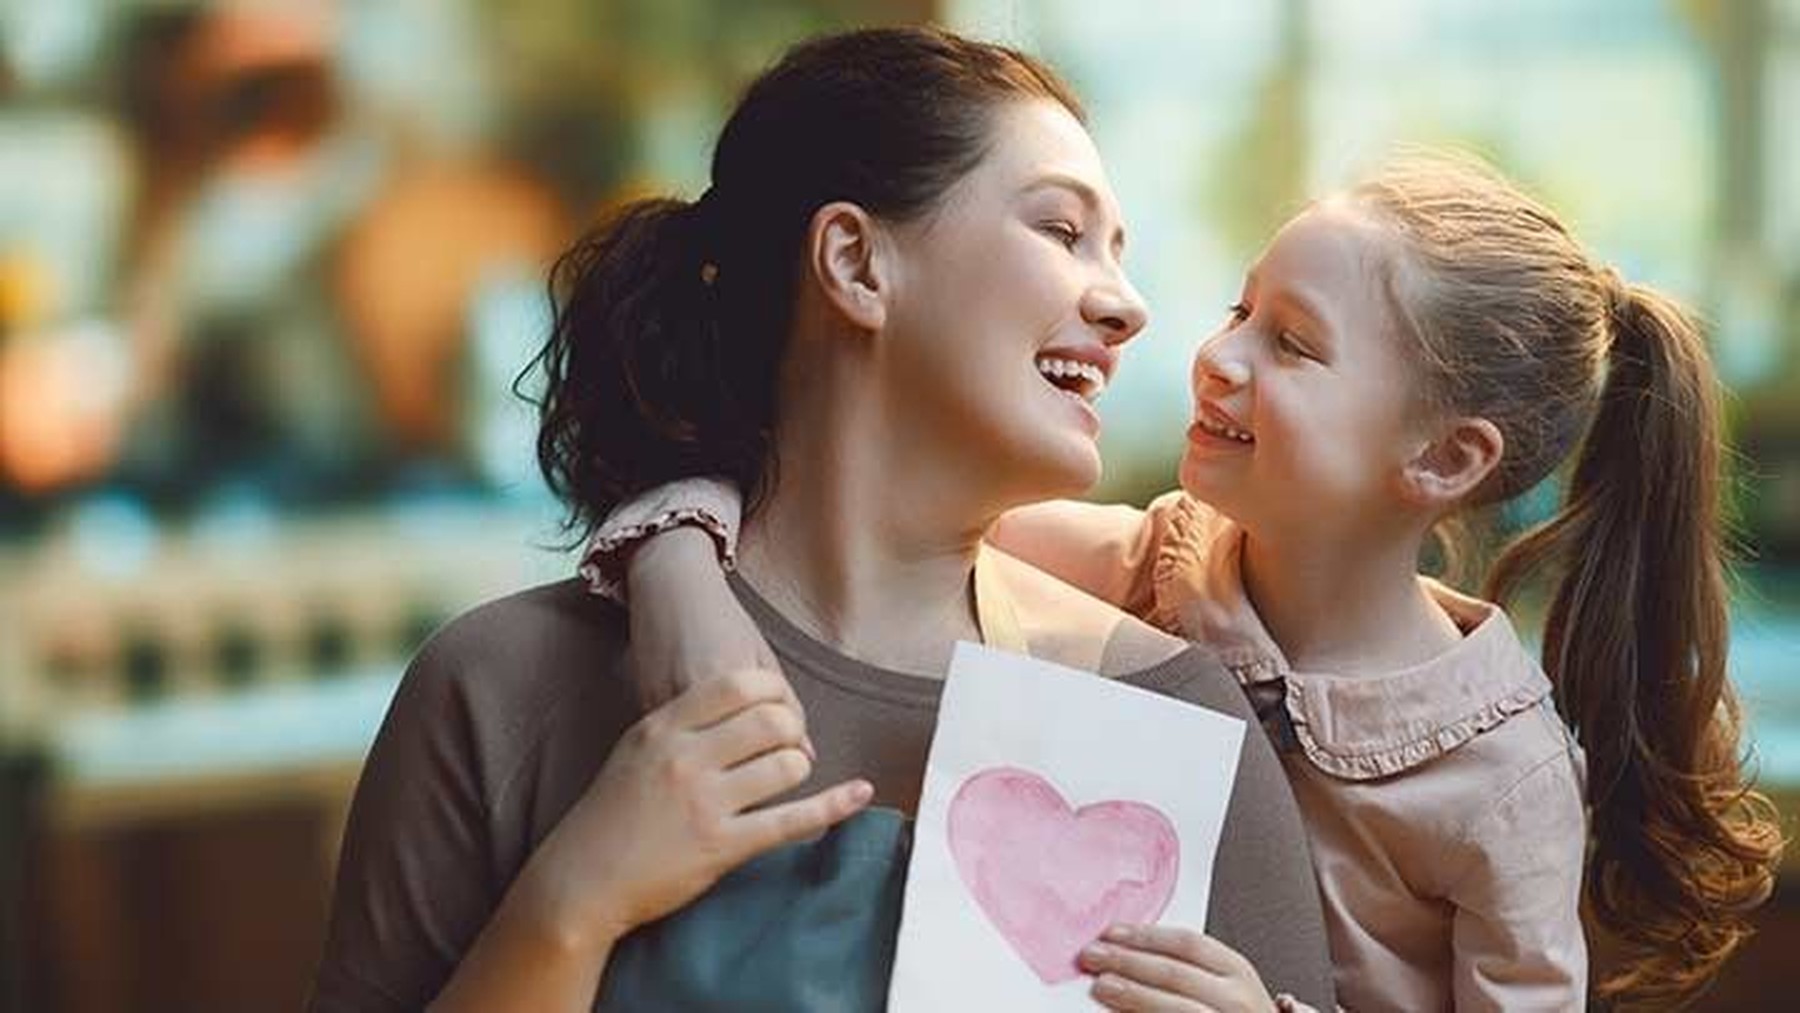 Madre e hija abrazadas con un dibujo de un corazón